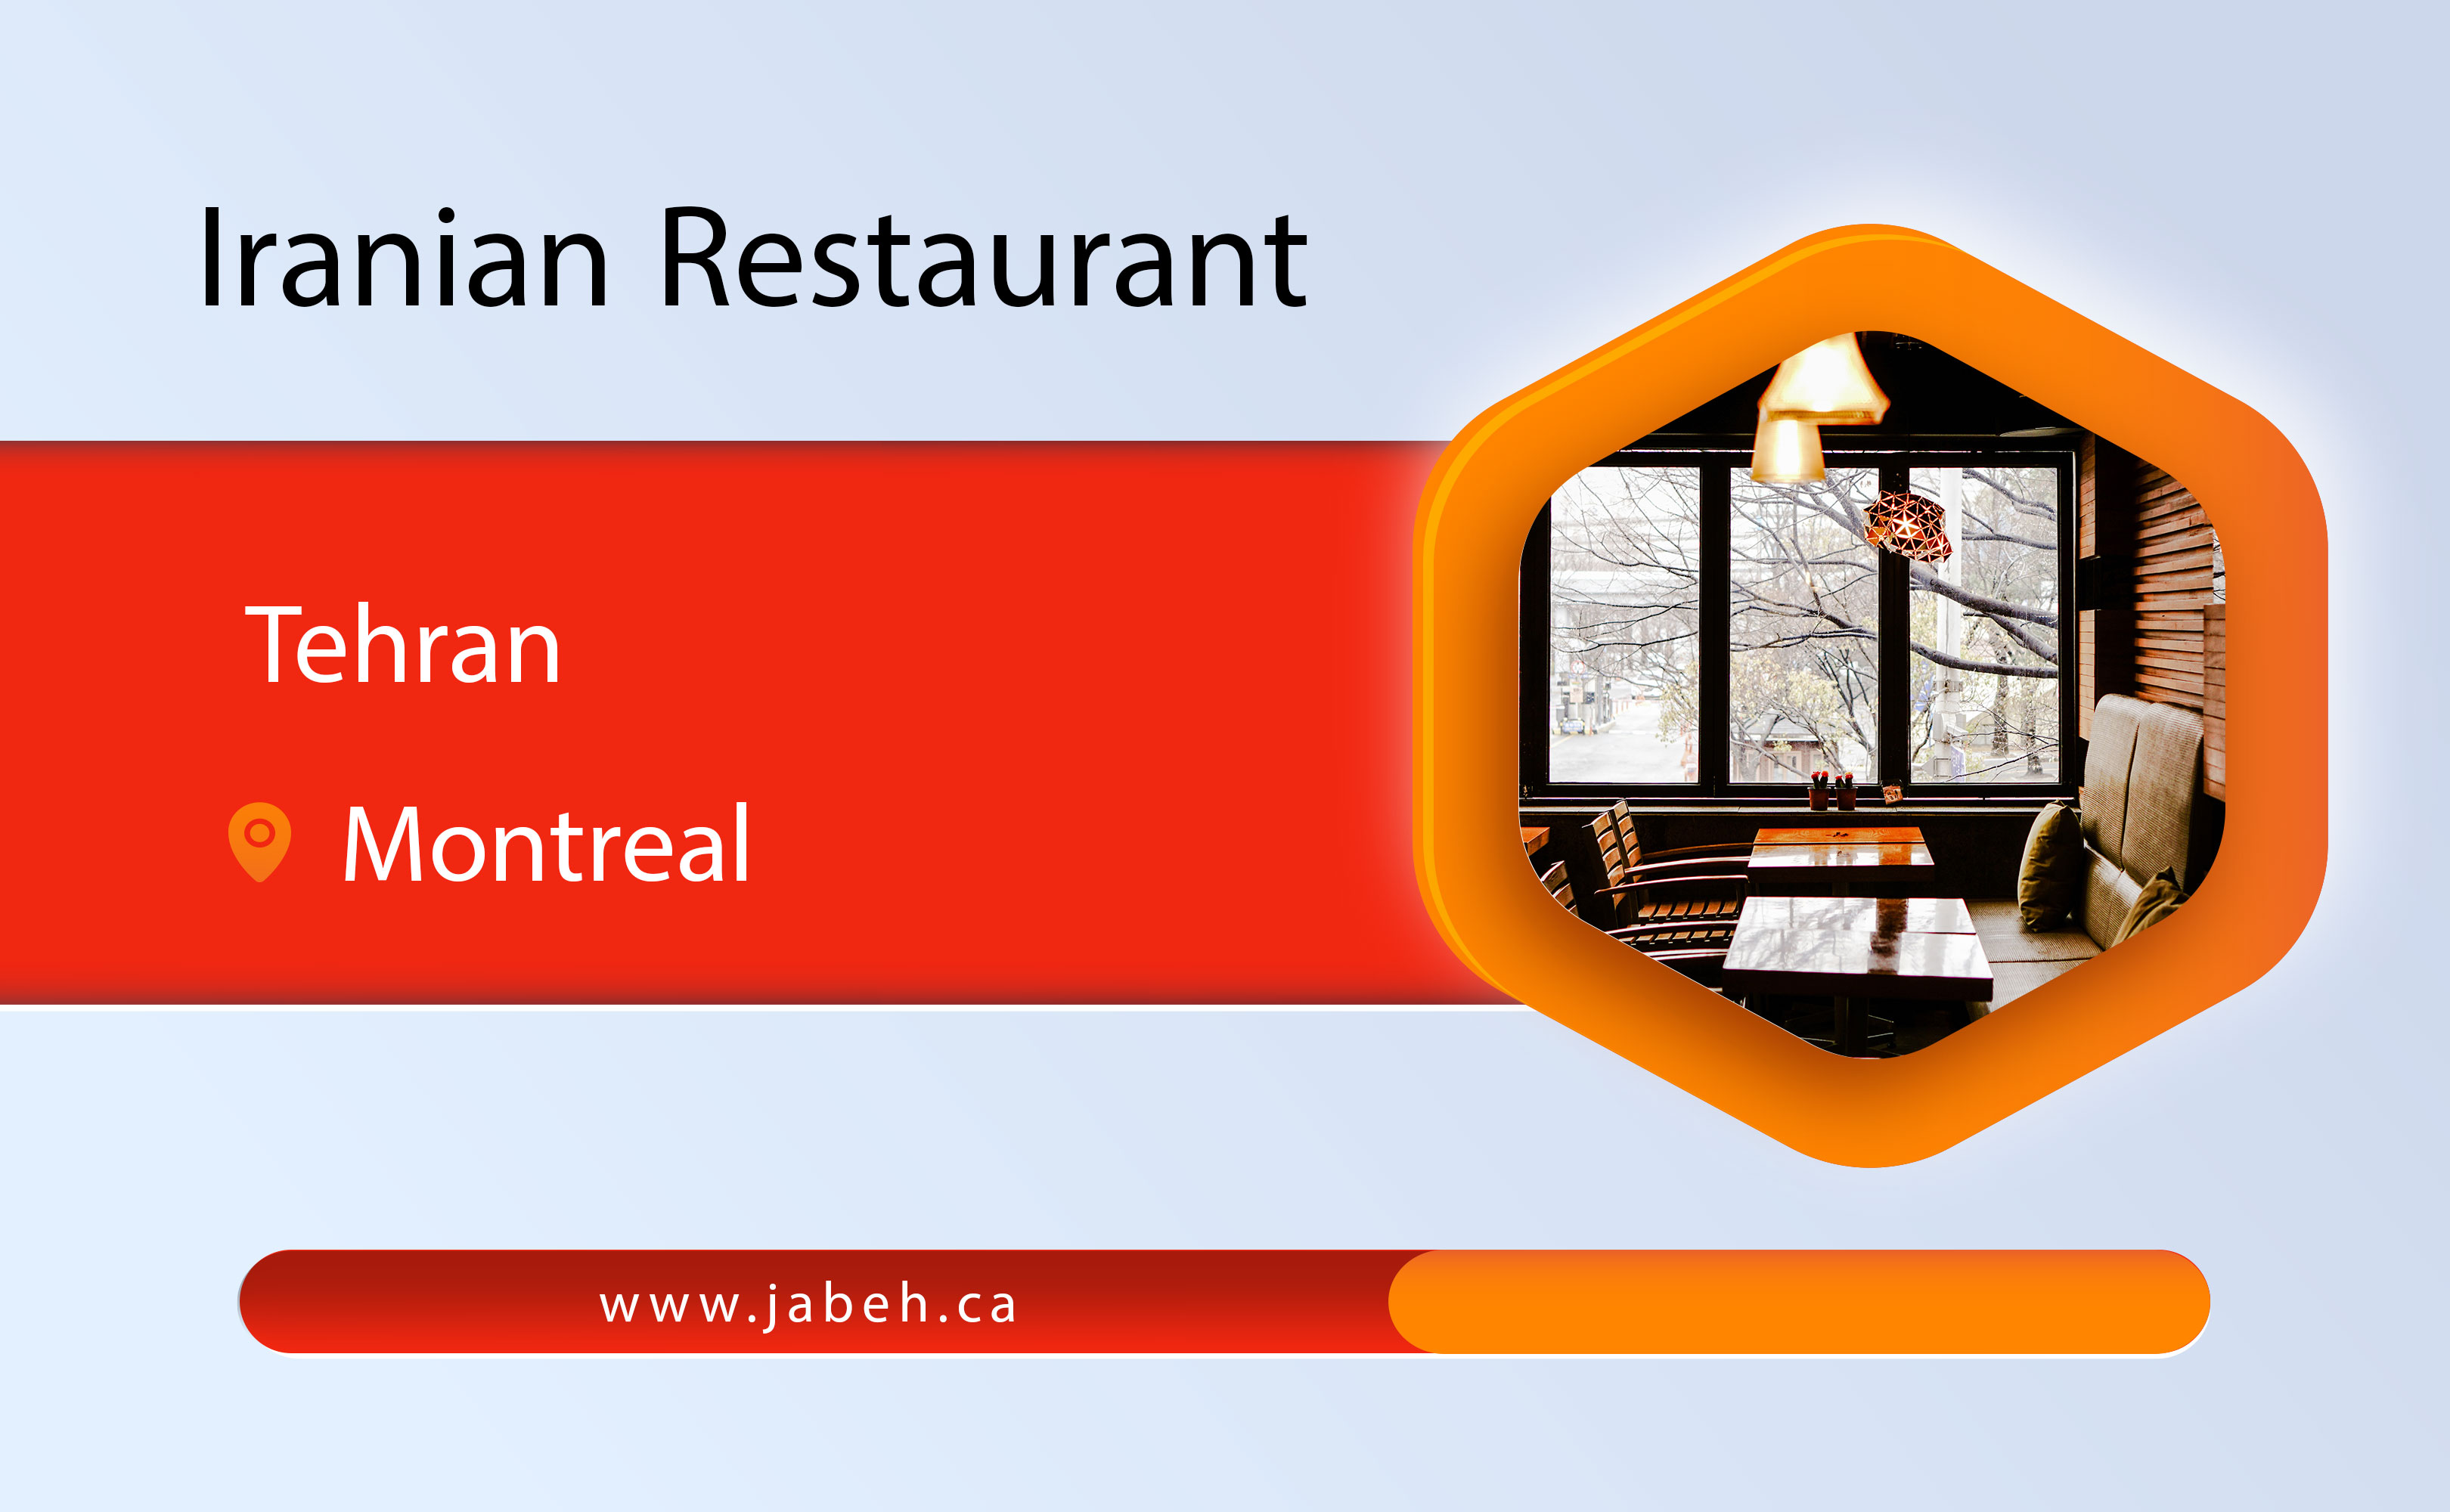 Tehran Iranian restaurant in Montreal